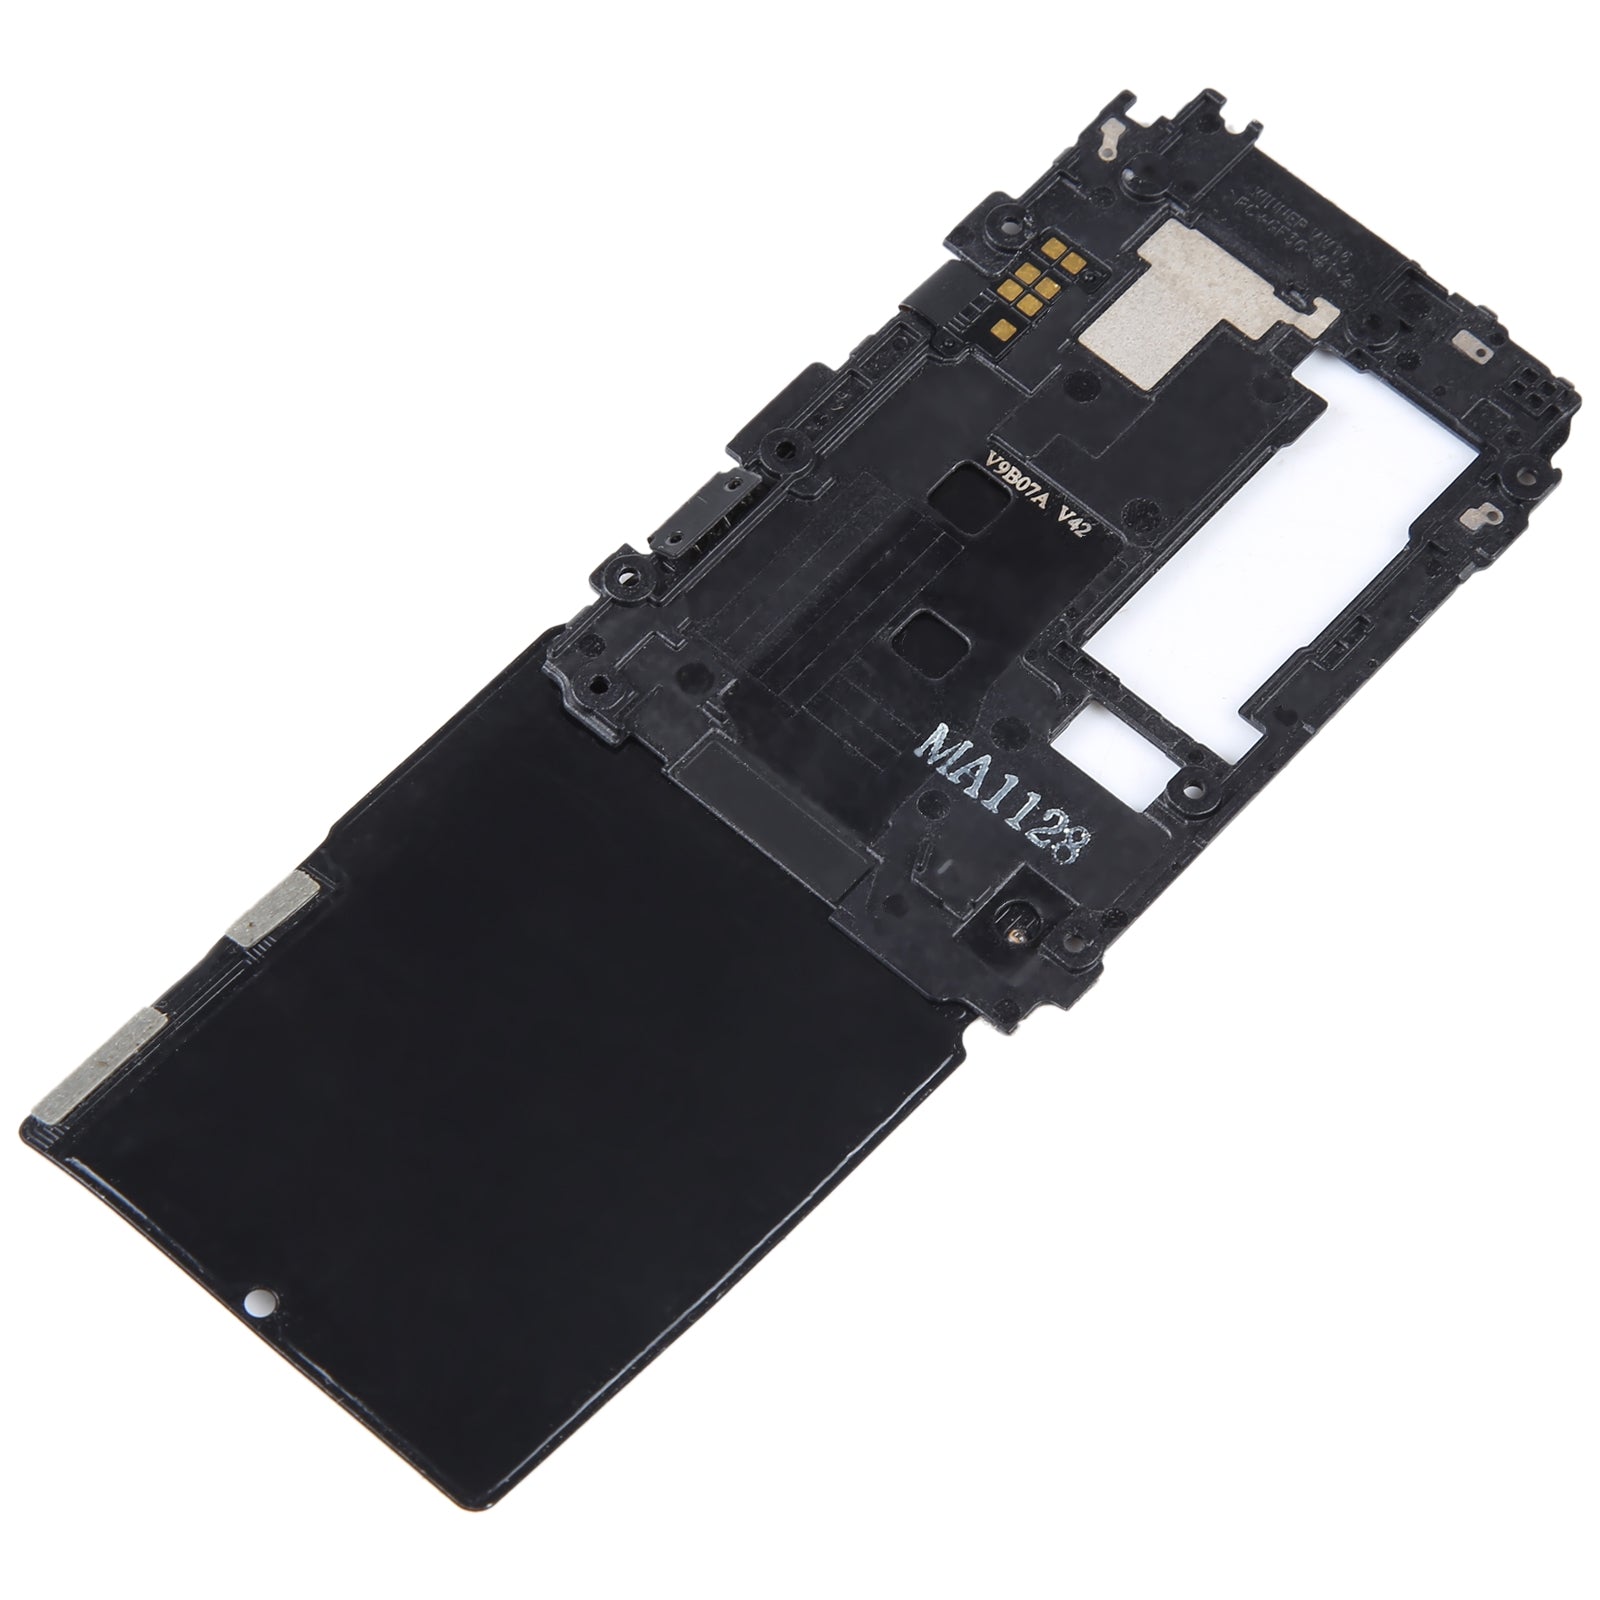 Adhesive Plate Wireless Charging Samsung Galaxy Fold F900